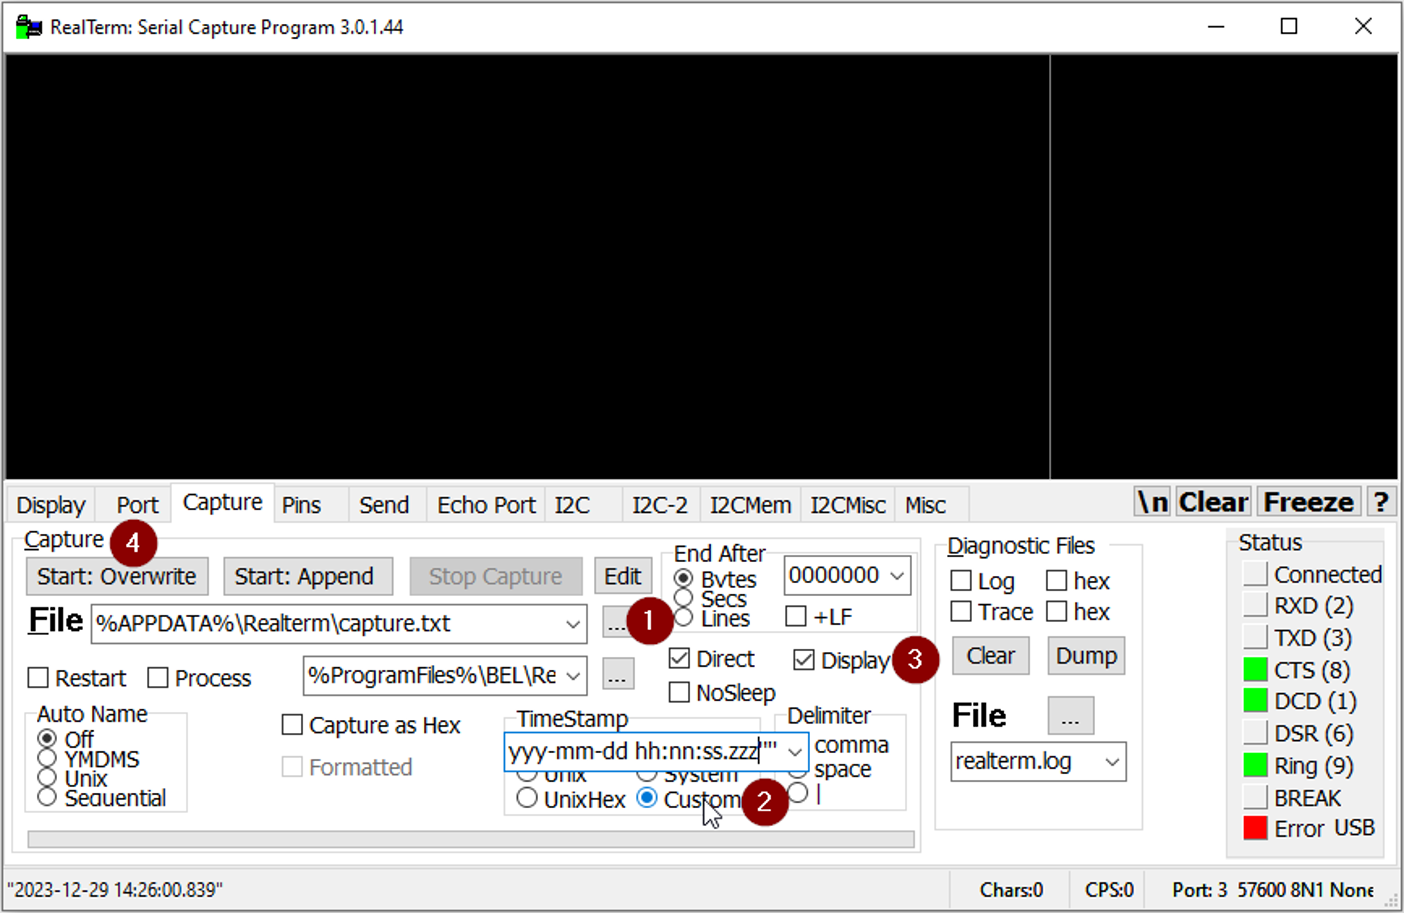 RealTerm: Serial Capture Program settings menu